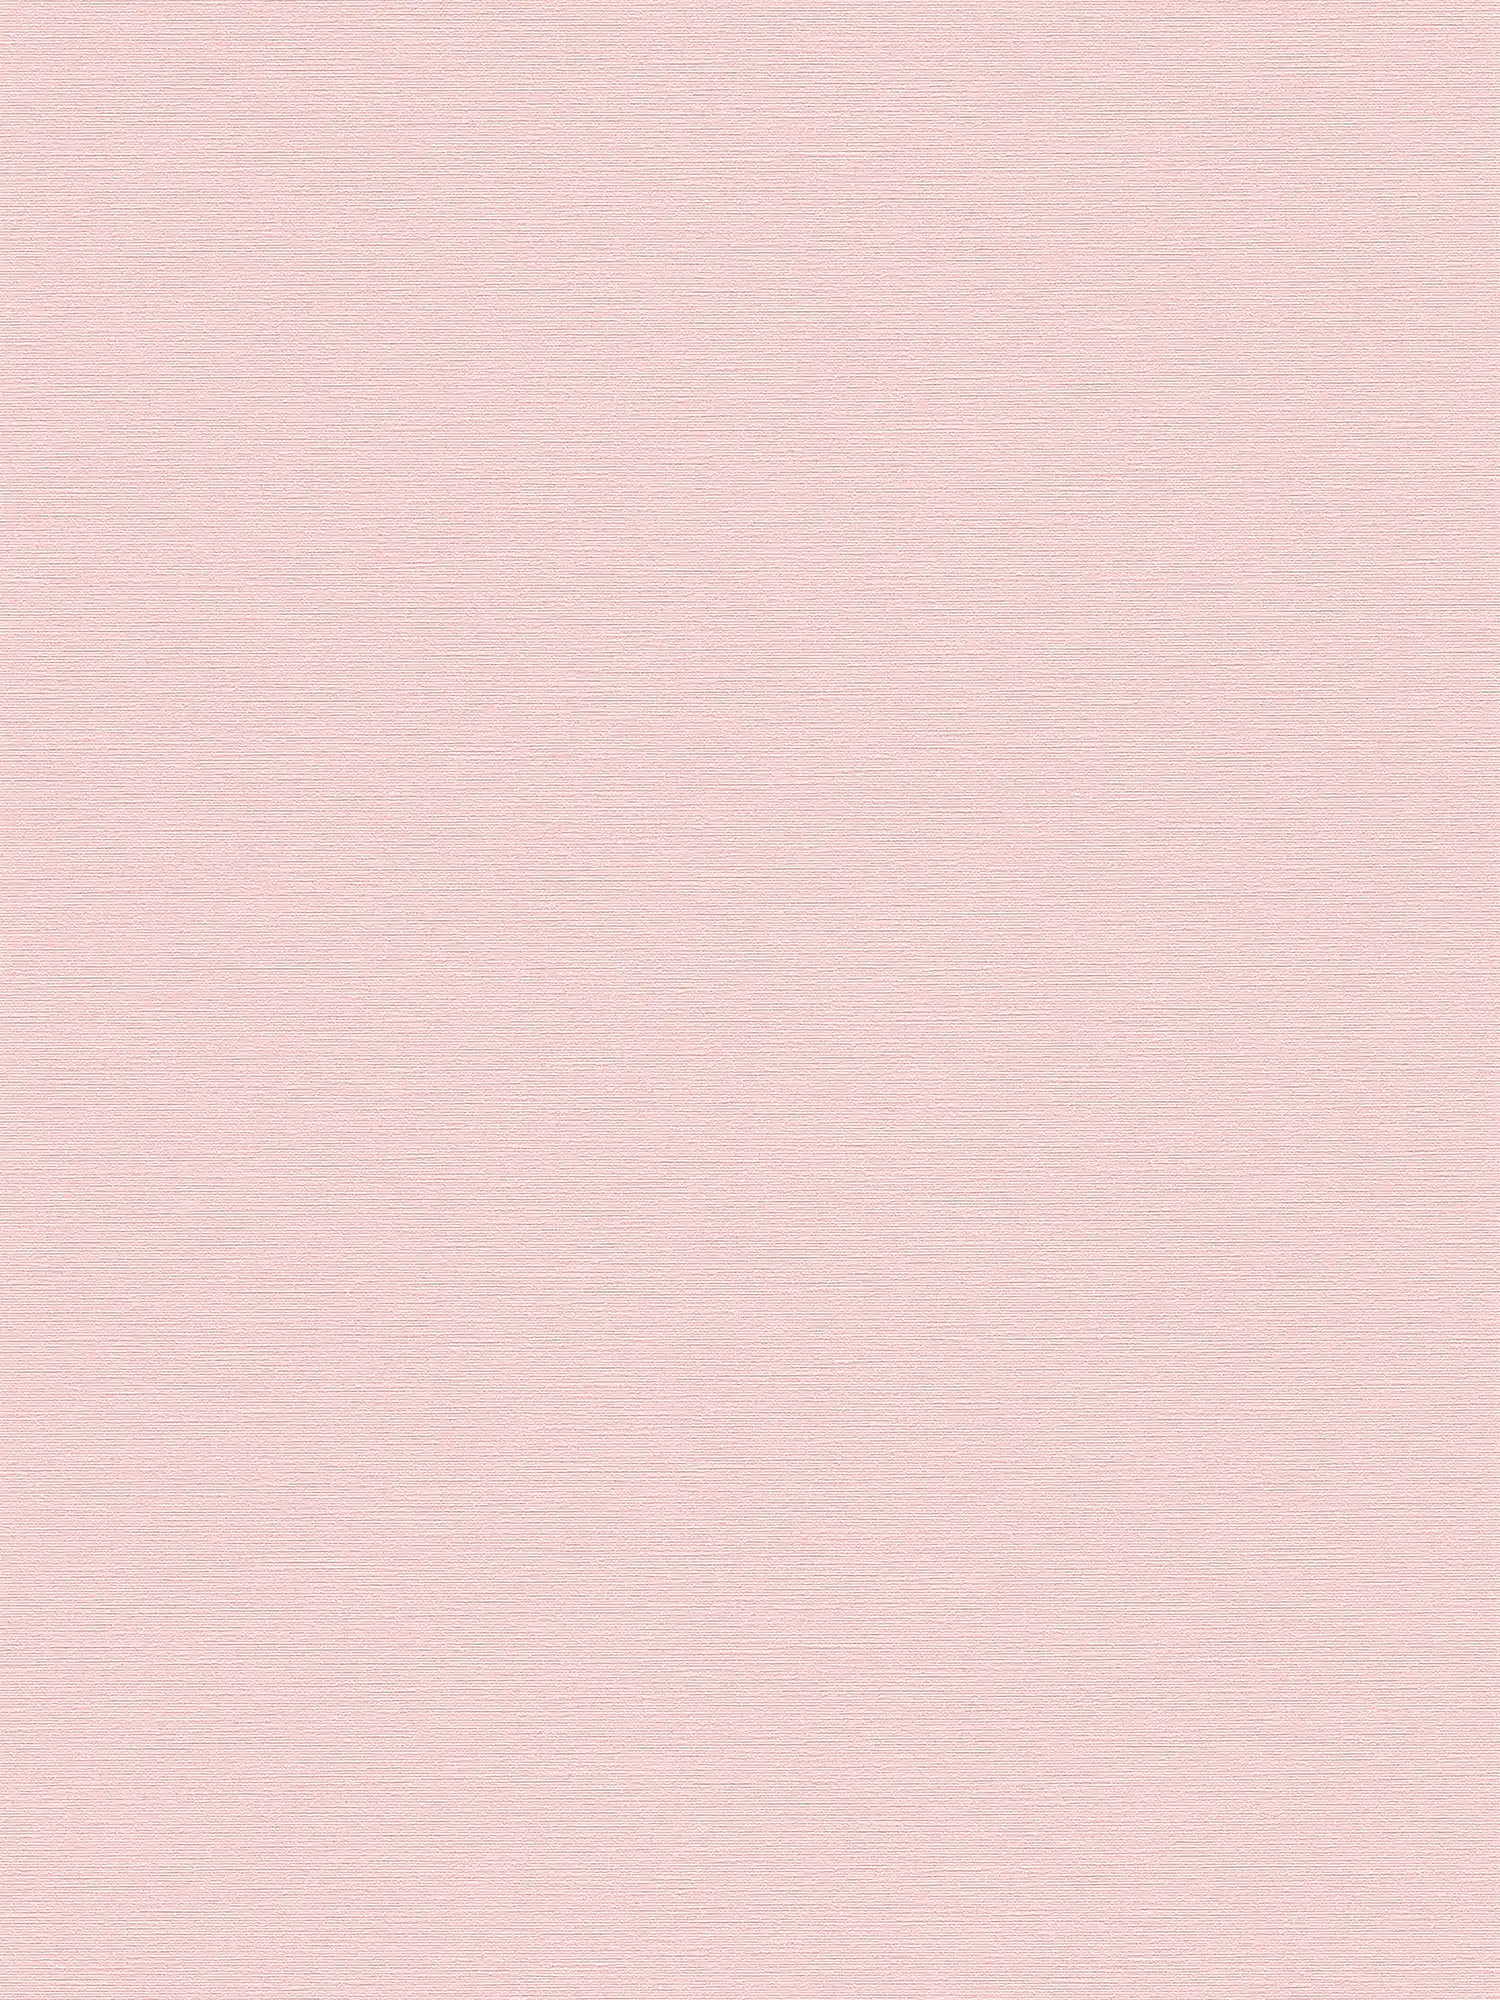 Plain non-woven wallpaper with linen structure - light pink
